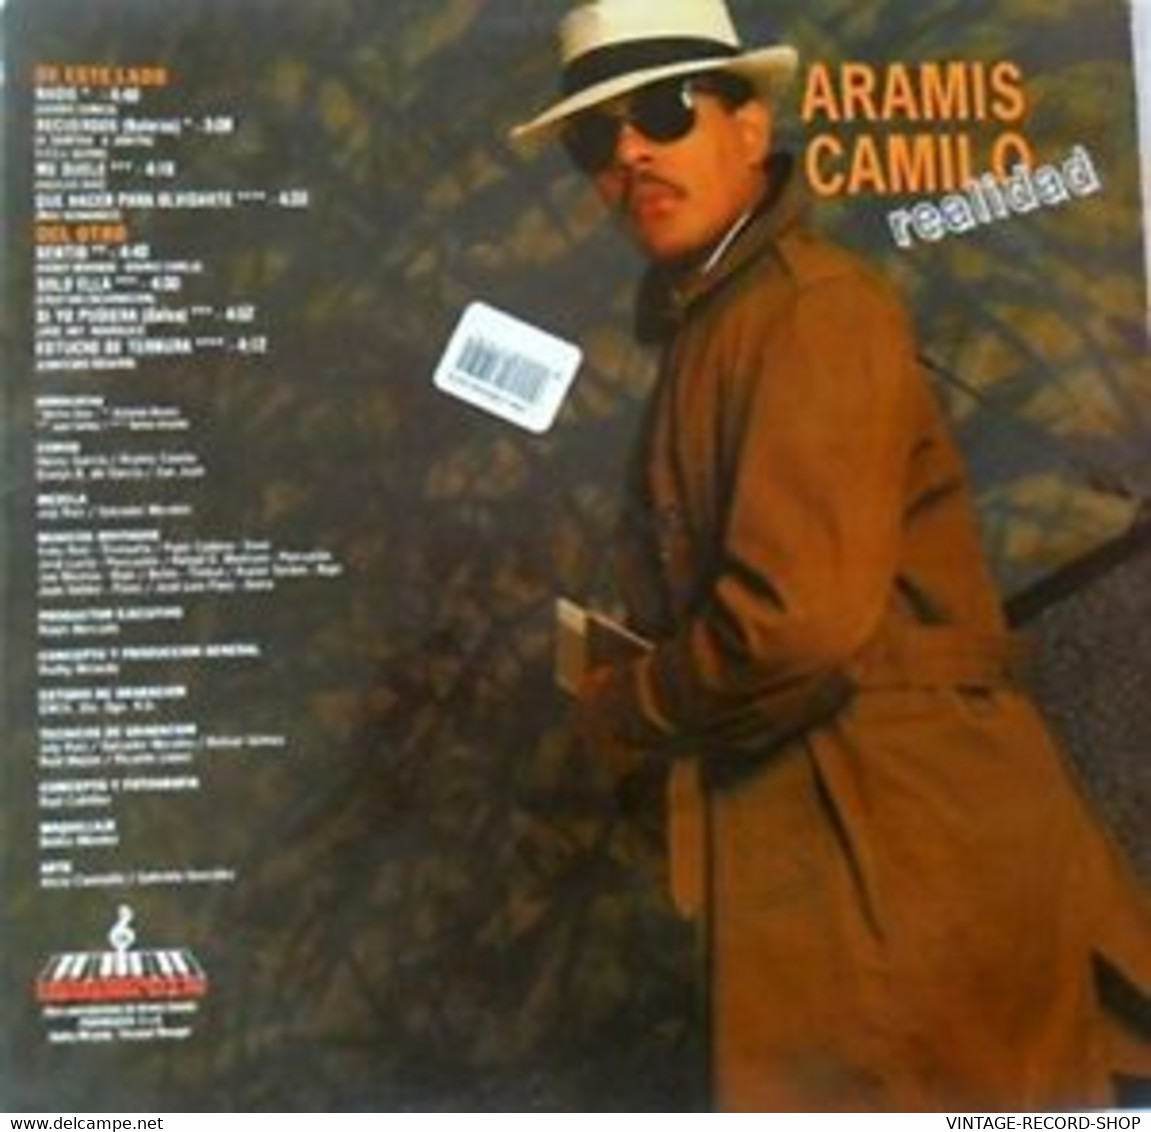 ARAMIS CAMILO*REALIDAD* RMM-SONOLUX LP 1992 SALSA BOLERO MERENGUE - Autres - Musique Espagnole